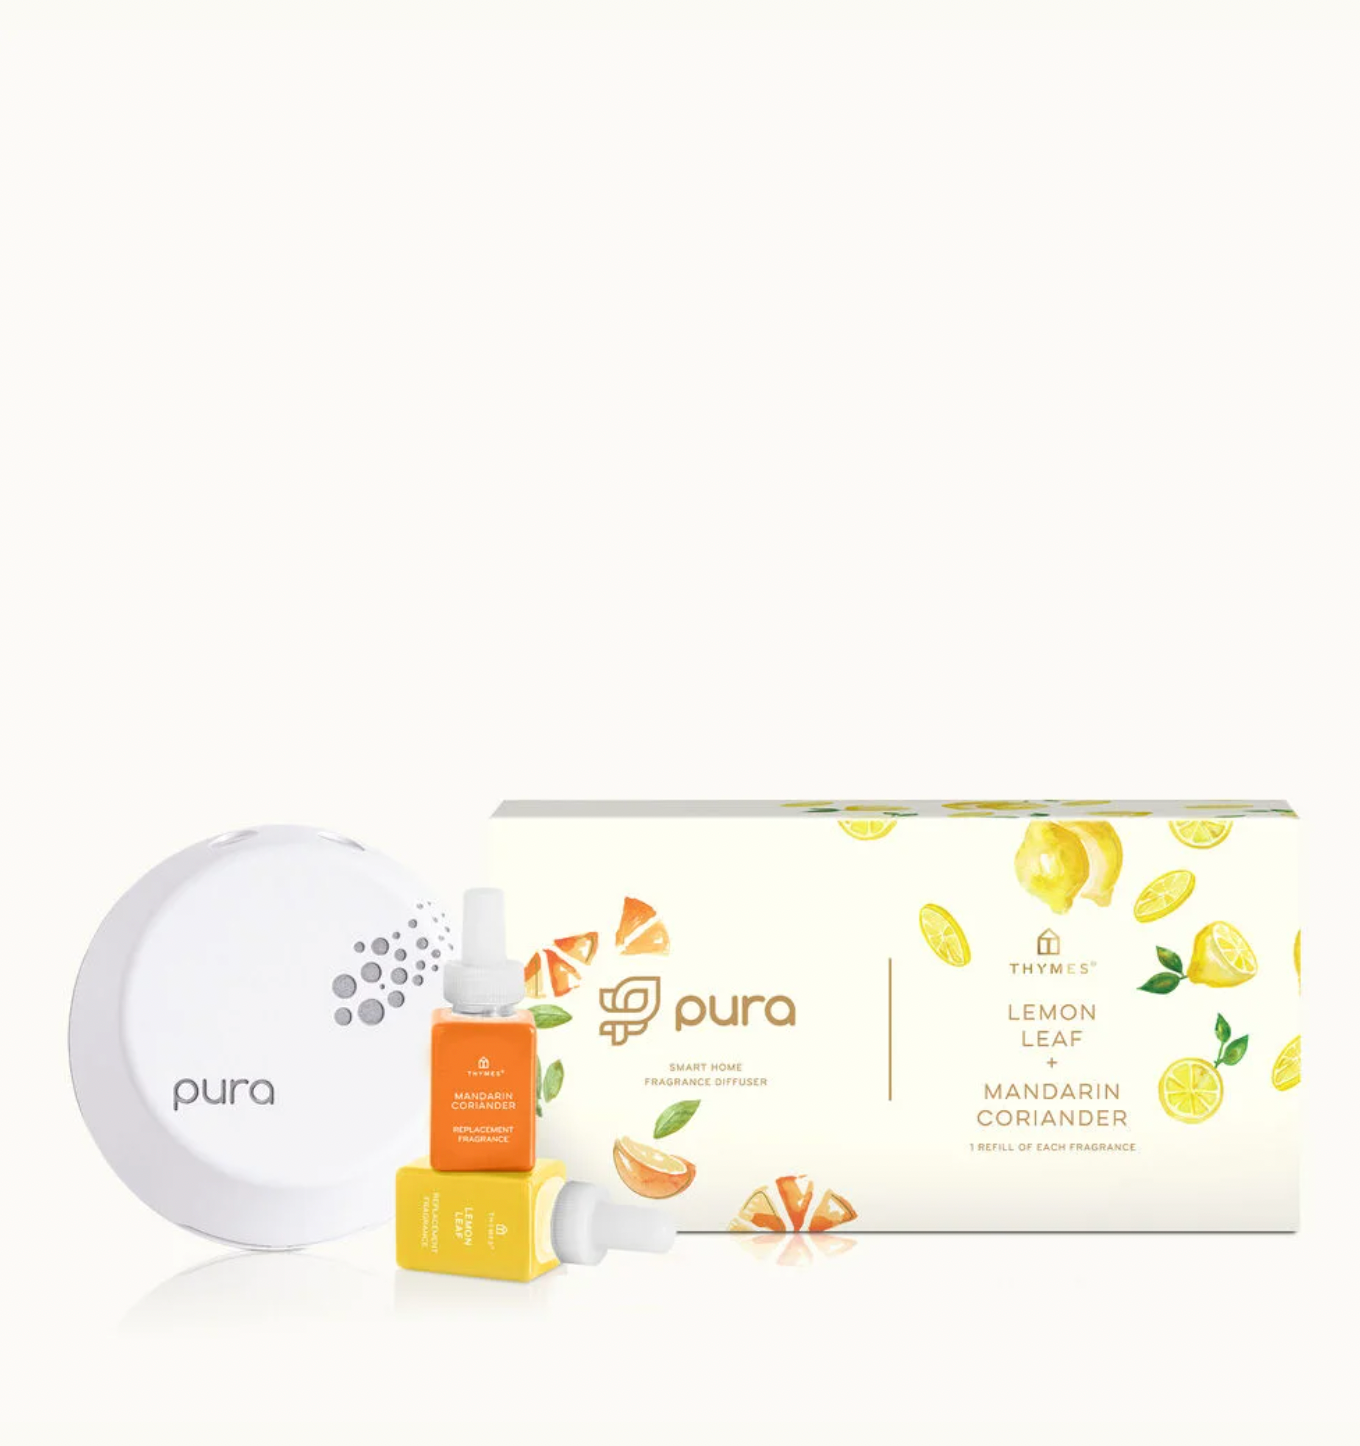 Mandarin Coriander & Lemon Leaf Pura Smart Home Diffuser Kit